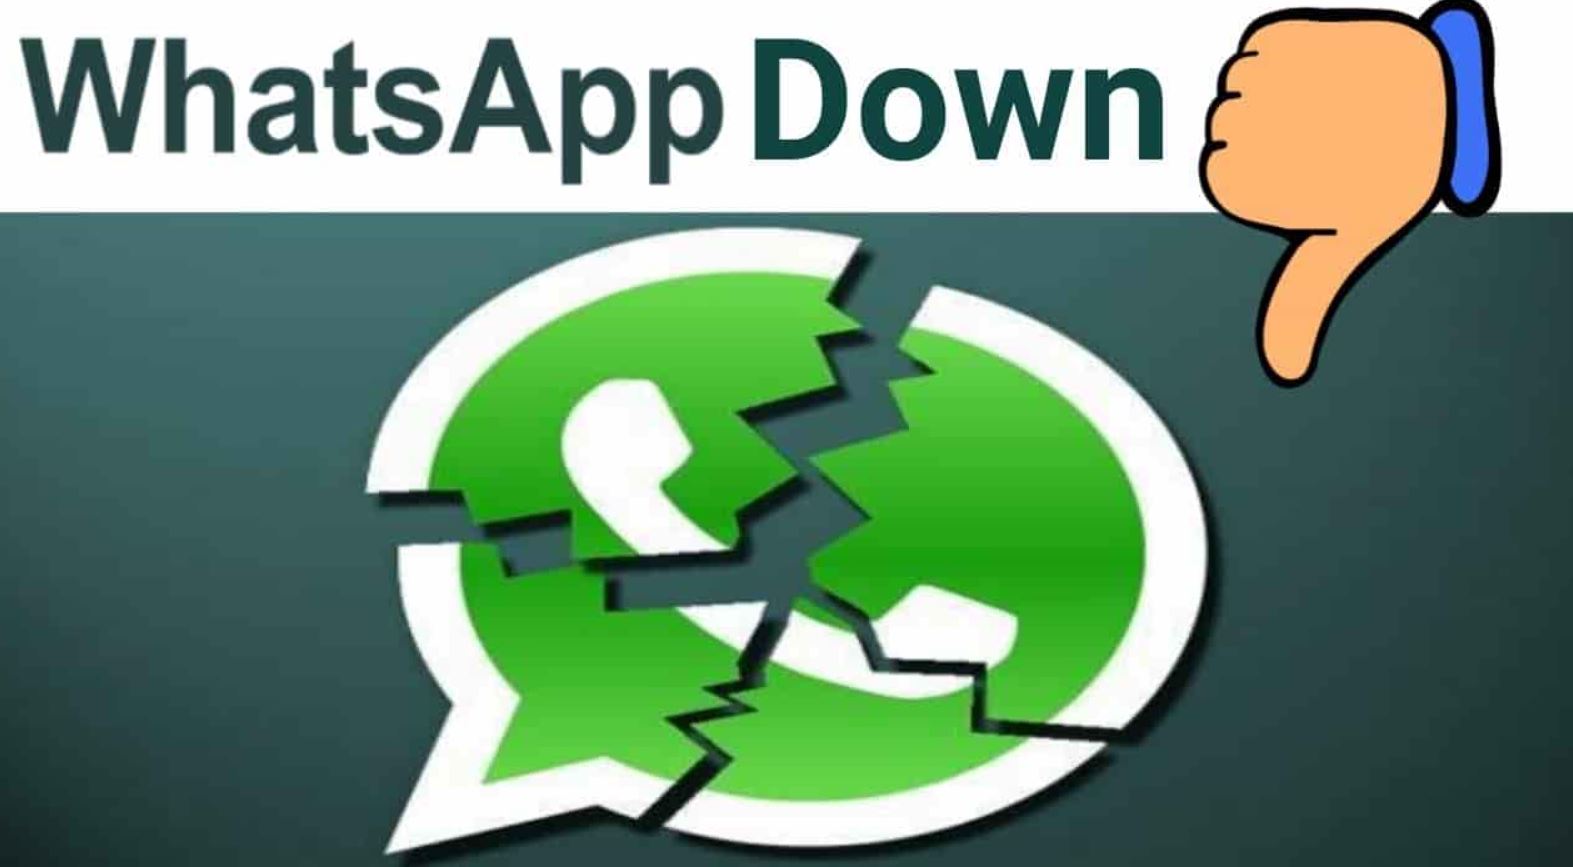 Whatsapp is down